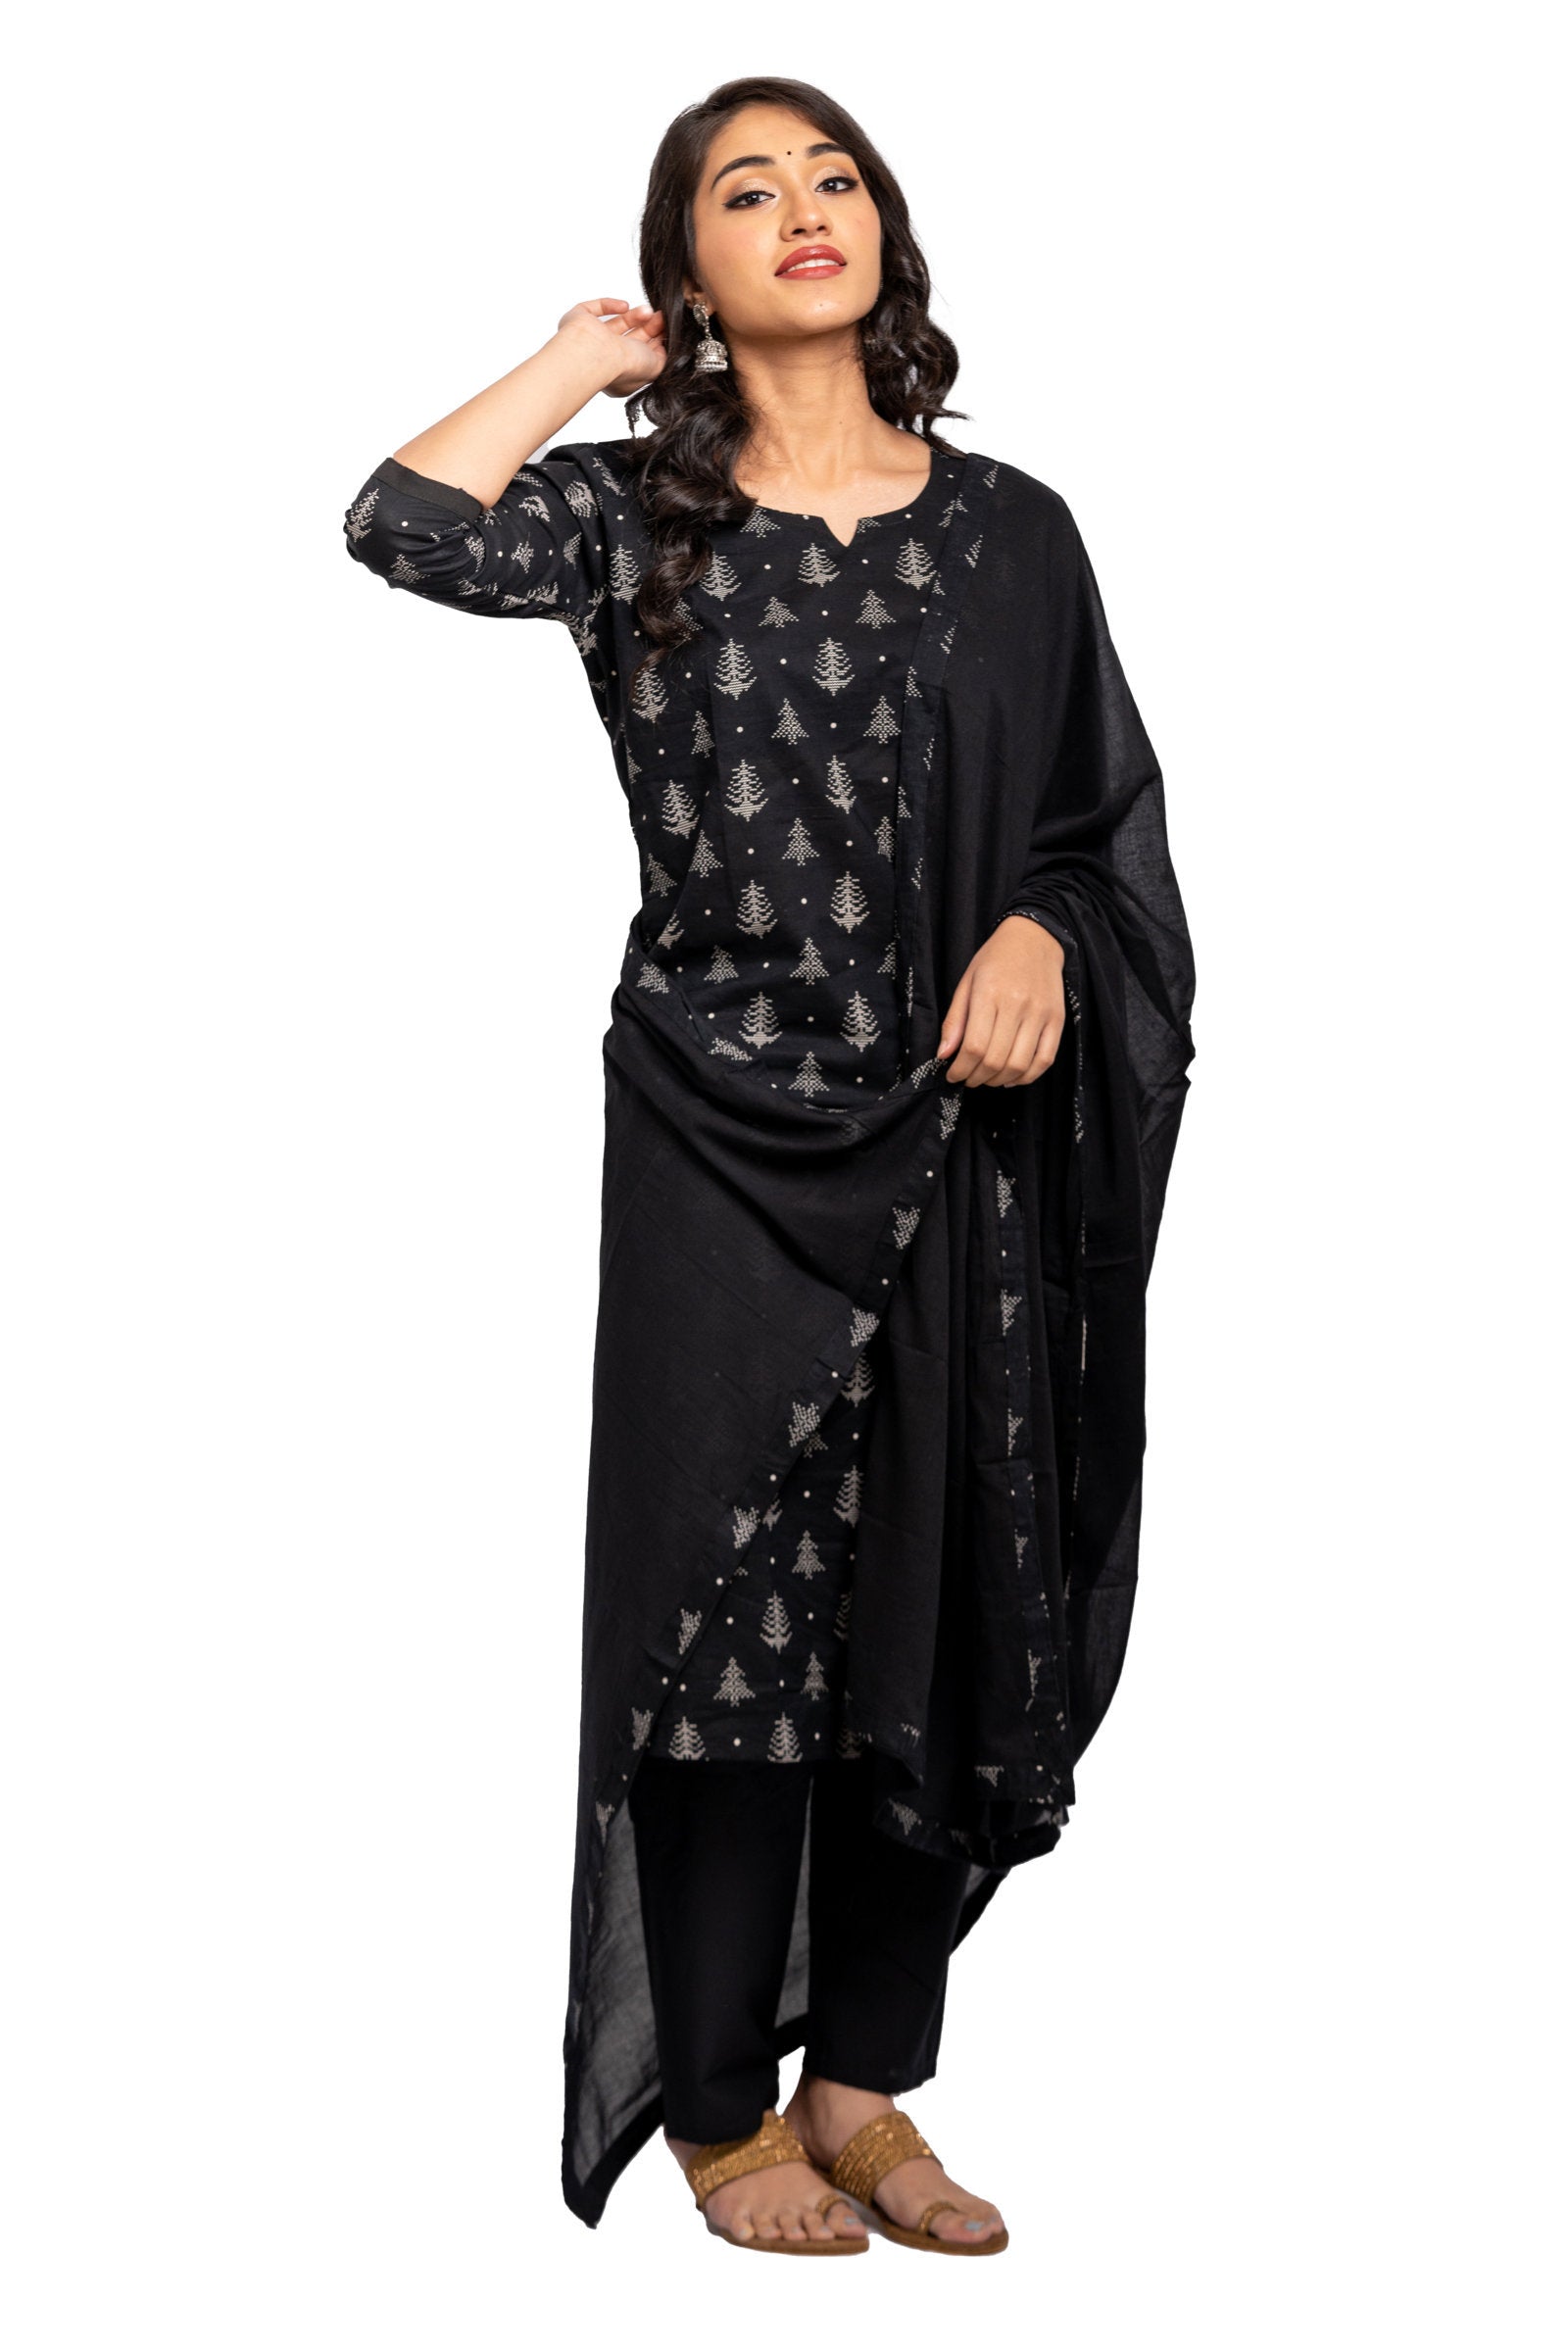 3 Piece Salwar - 100% Cotton black salwar with white prints. Plain black 2 metre long dupatta with edge design matching the salwar fabric. Plain black pants matching the dupatta.